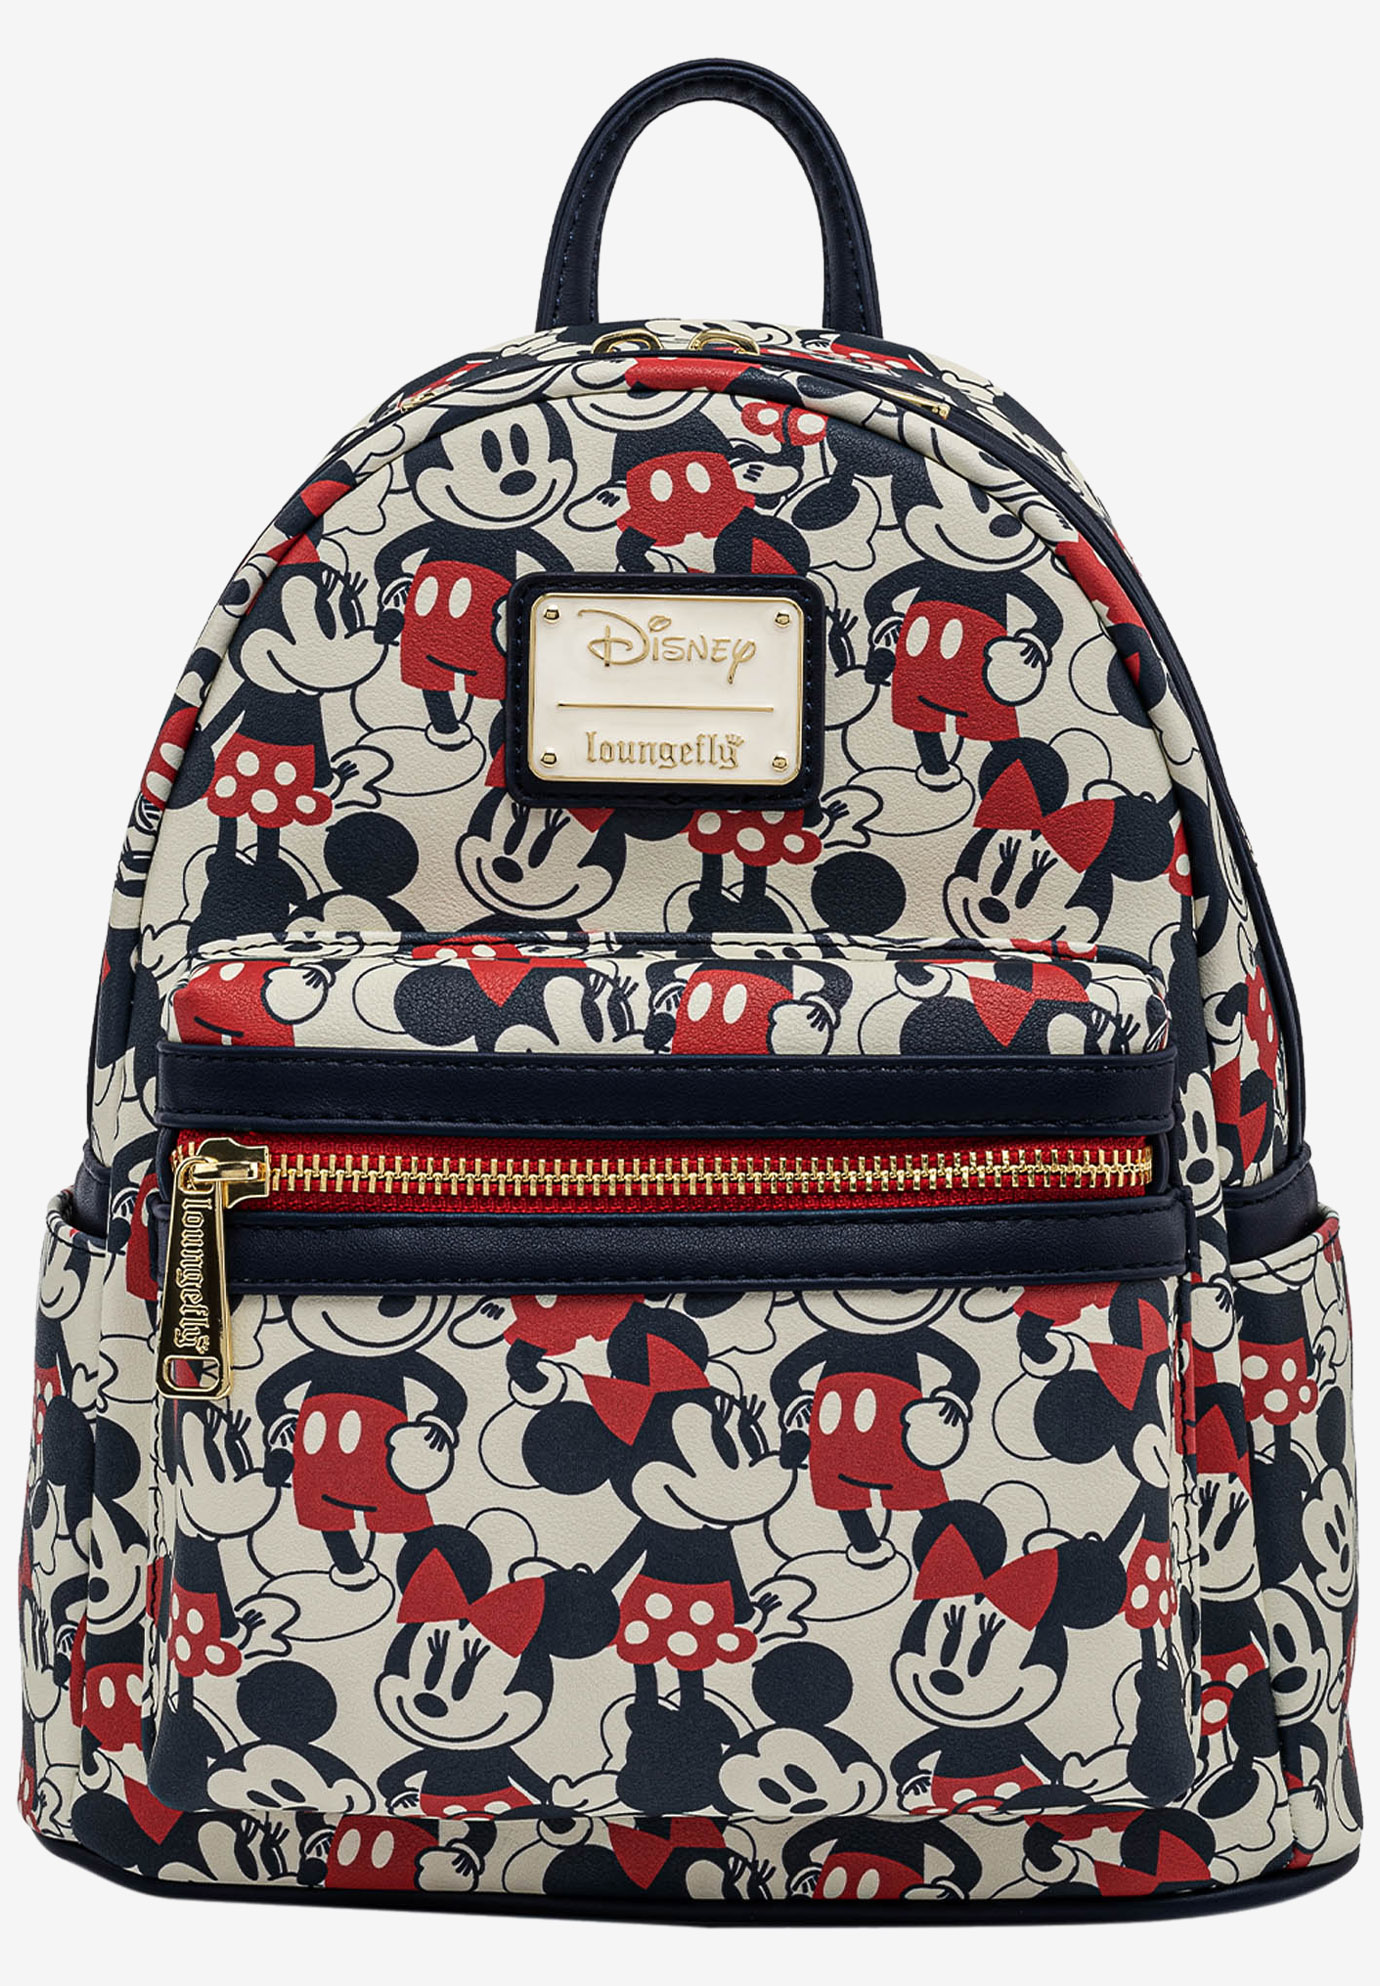 Disney Backpacks for Women  Black Friday Sale & Deals up to 40